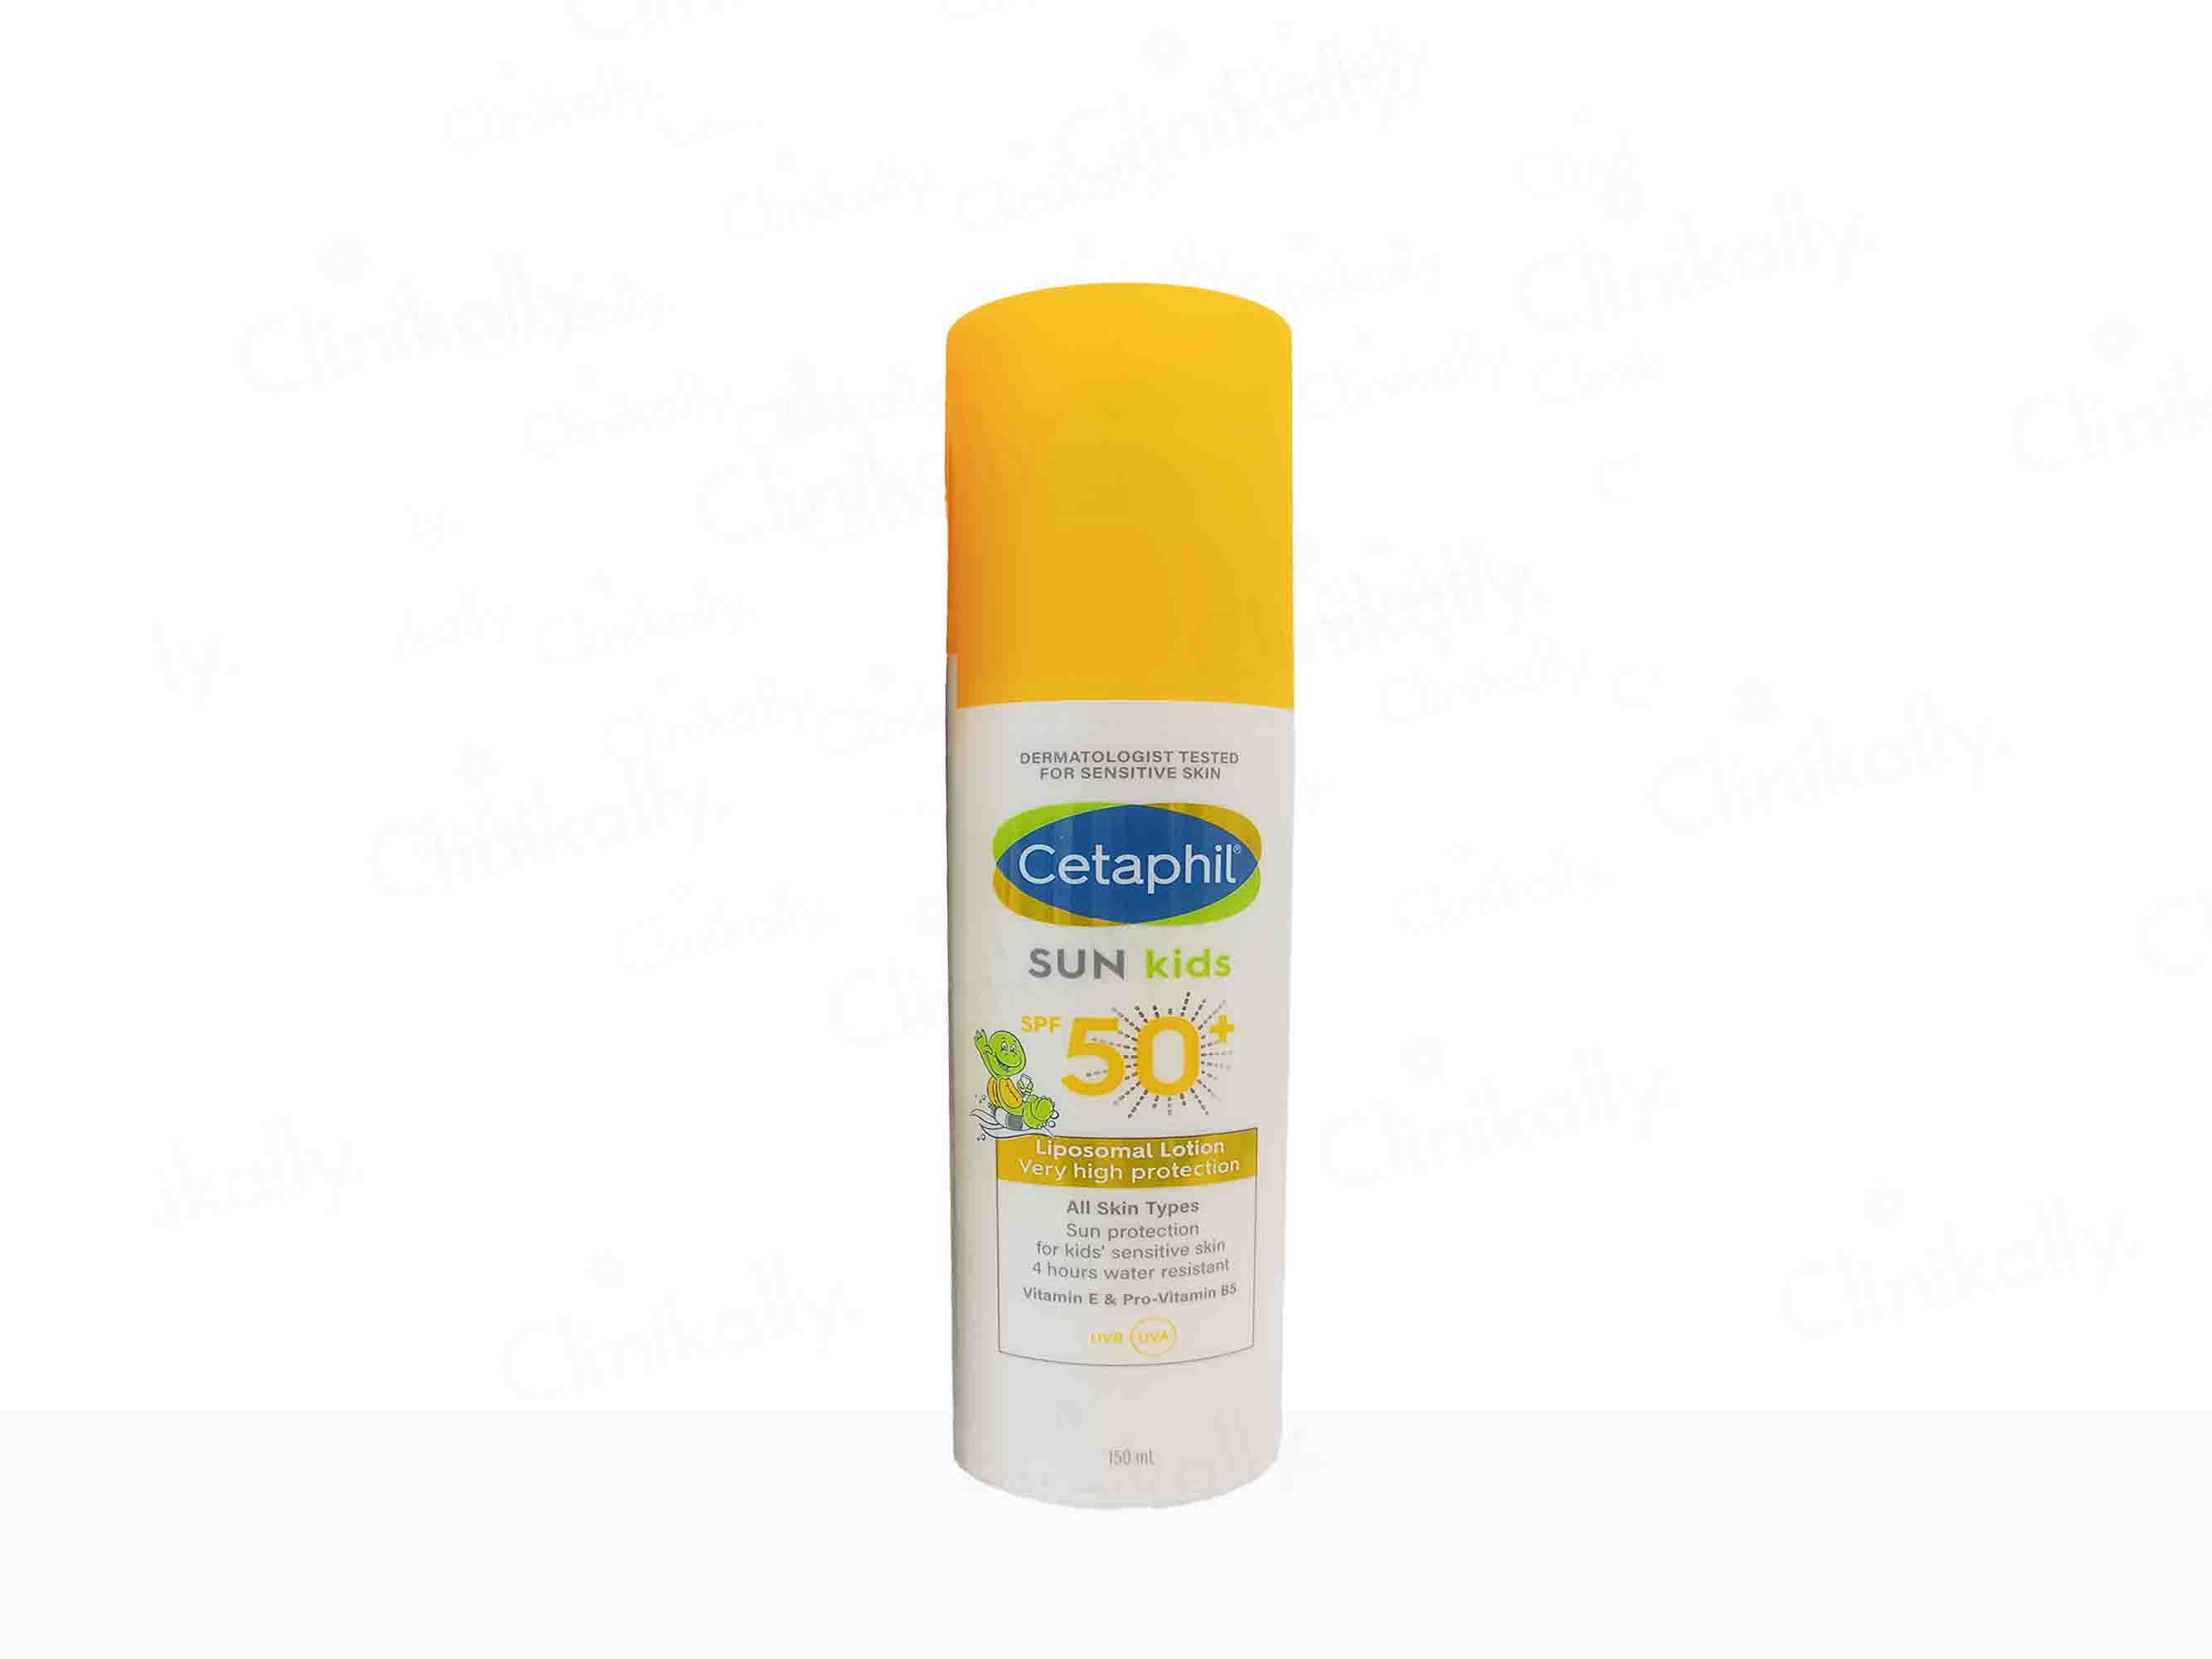 Cetaphil Sun Kids Very High Protection Liposomal Lotion SPF 50+ - Clinikally